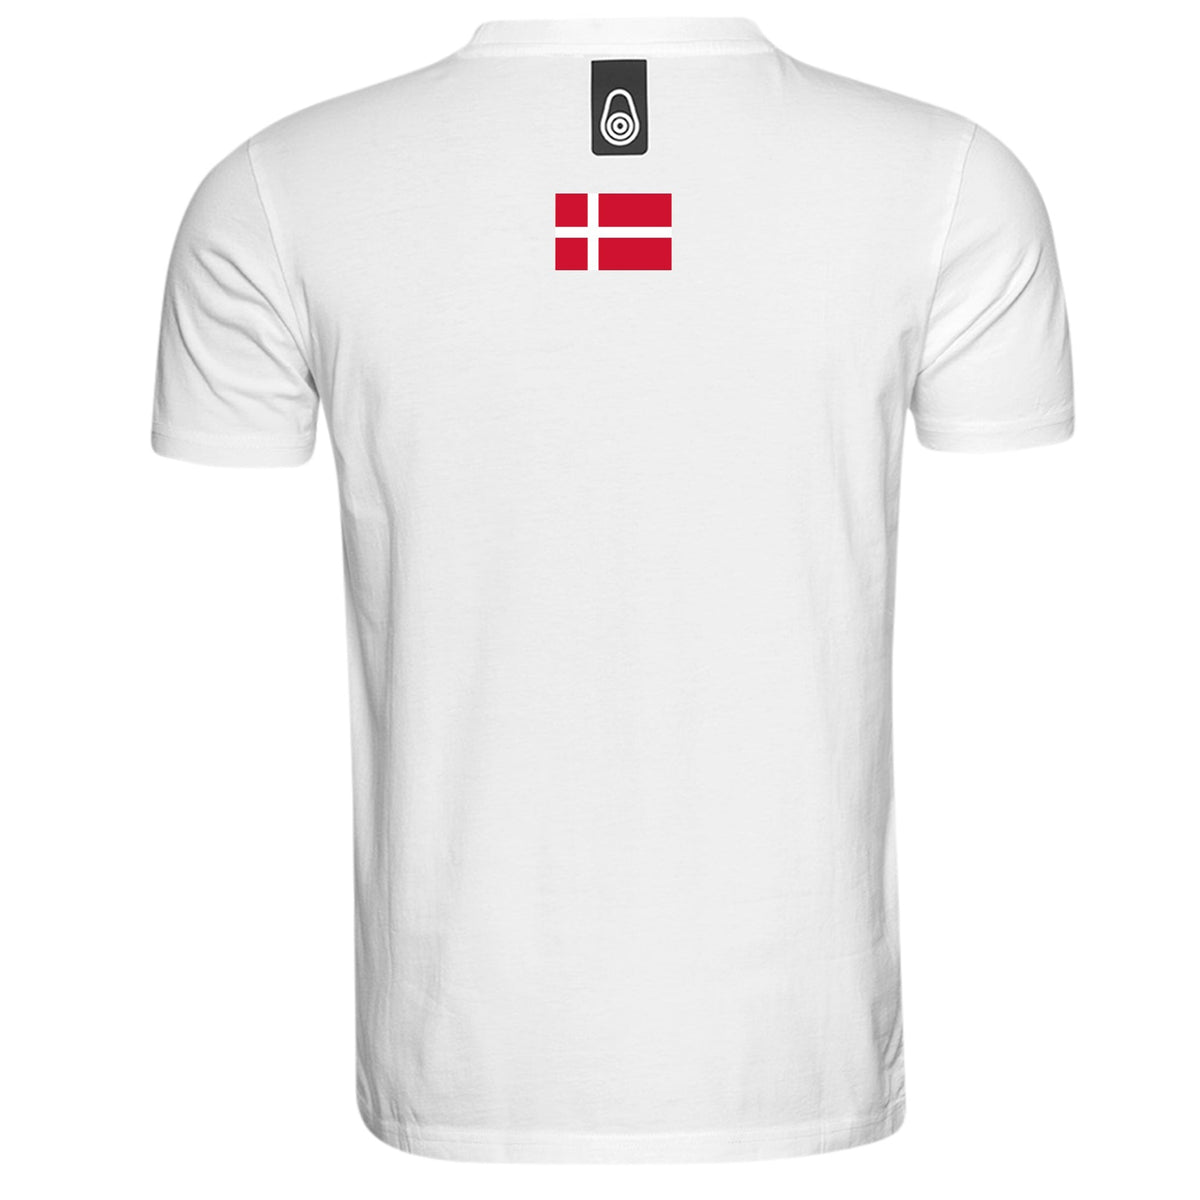 SAILGP Copenhagen Event Ocean White T-Shirt